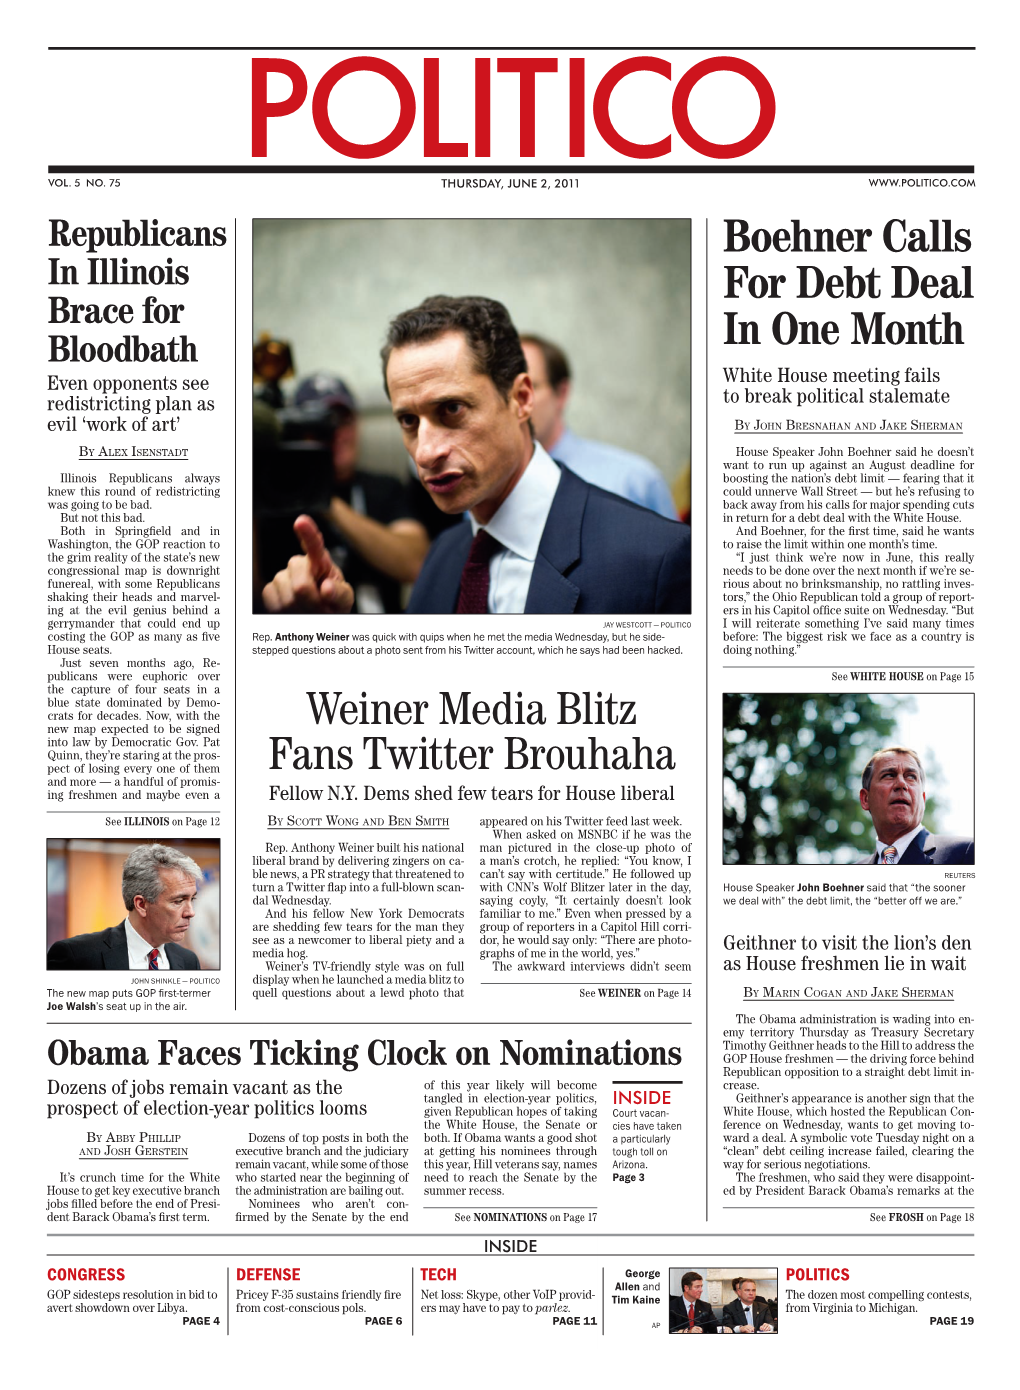 Boehner Calls for Debt Deal in One Month Weiner Media Blitz Fans